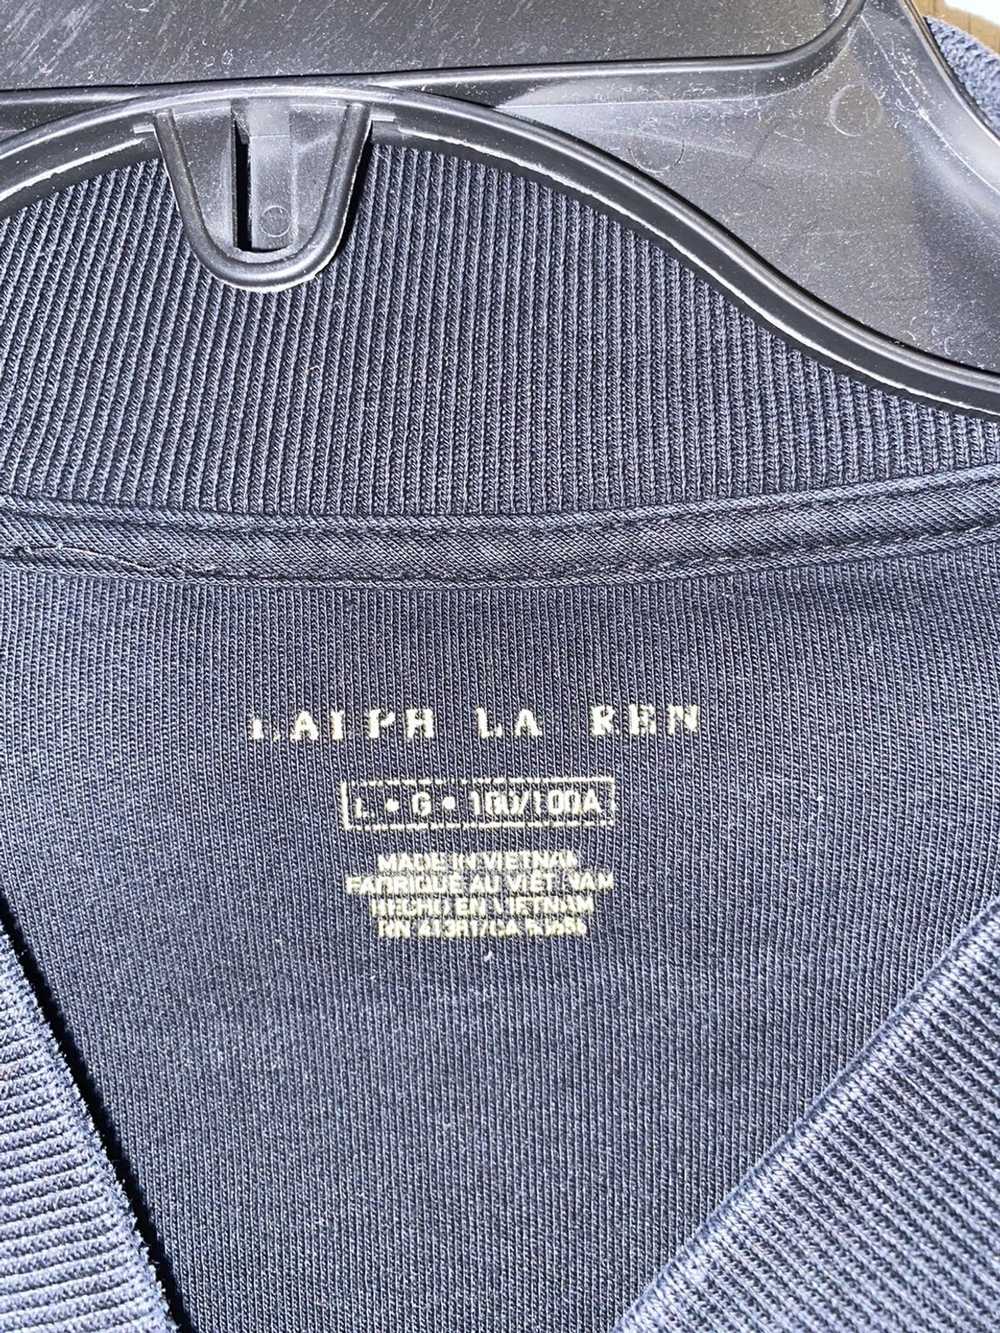 Polo Ralph Lauren Polo Ralph Lauren Track Jacket - image 2